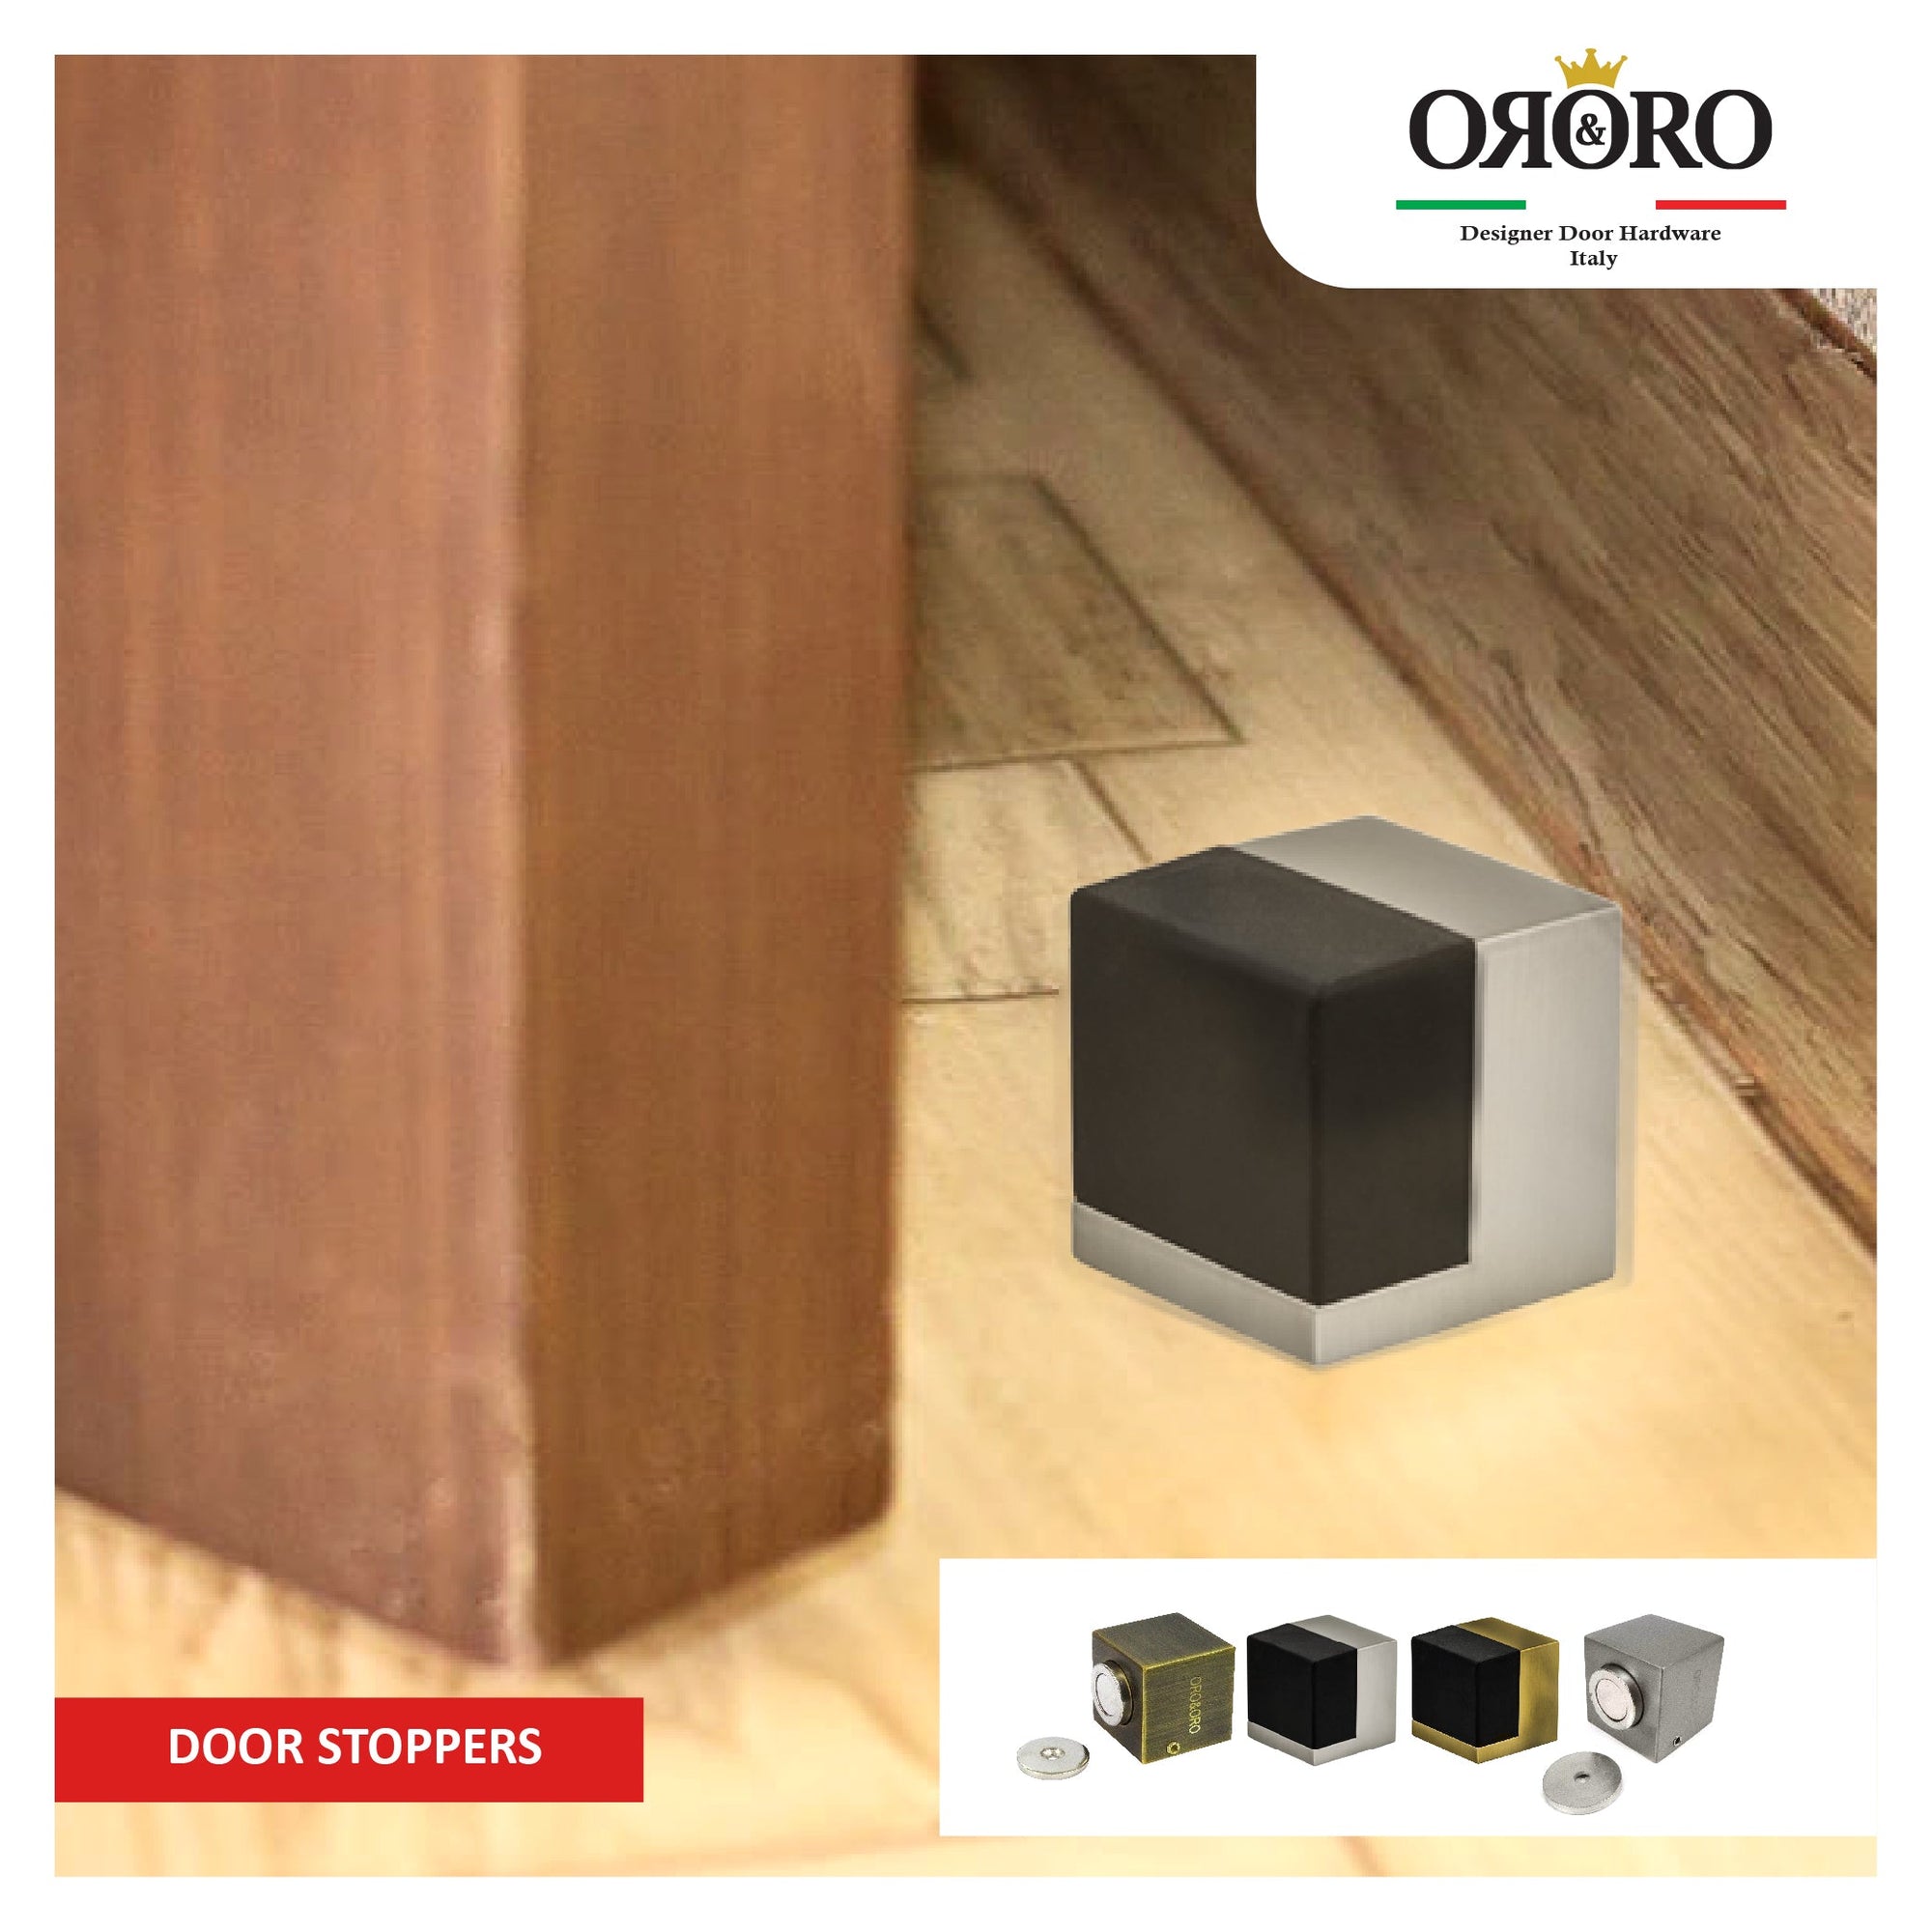 Oro & Oro Door Stoppers - Premium door protection for enhanced functionality and aesthetics.